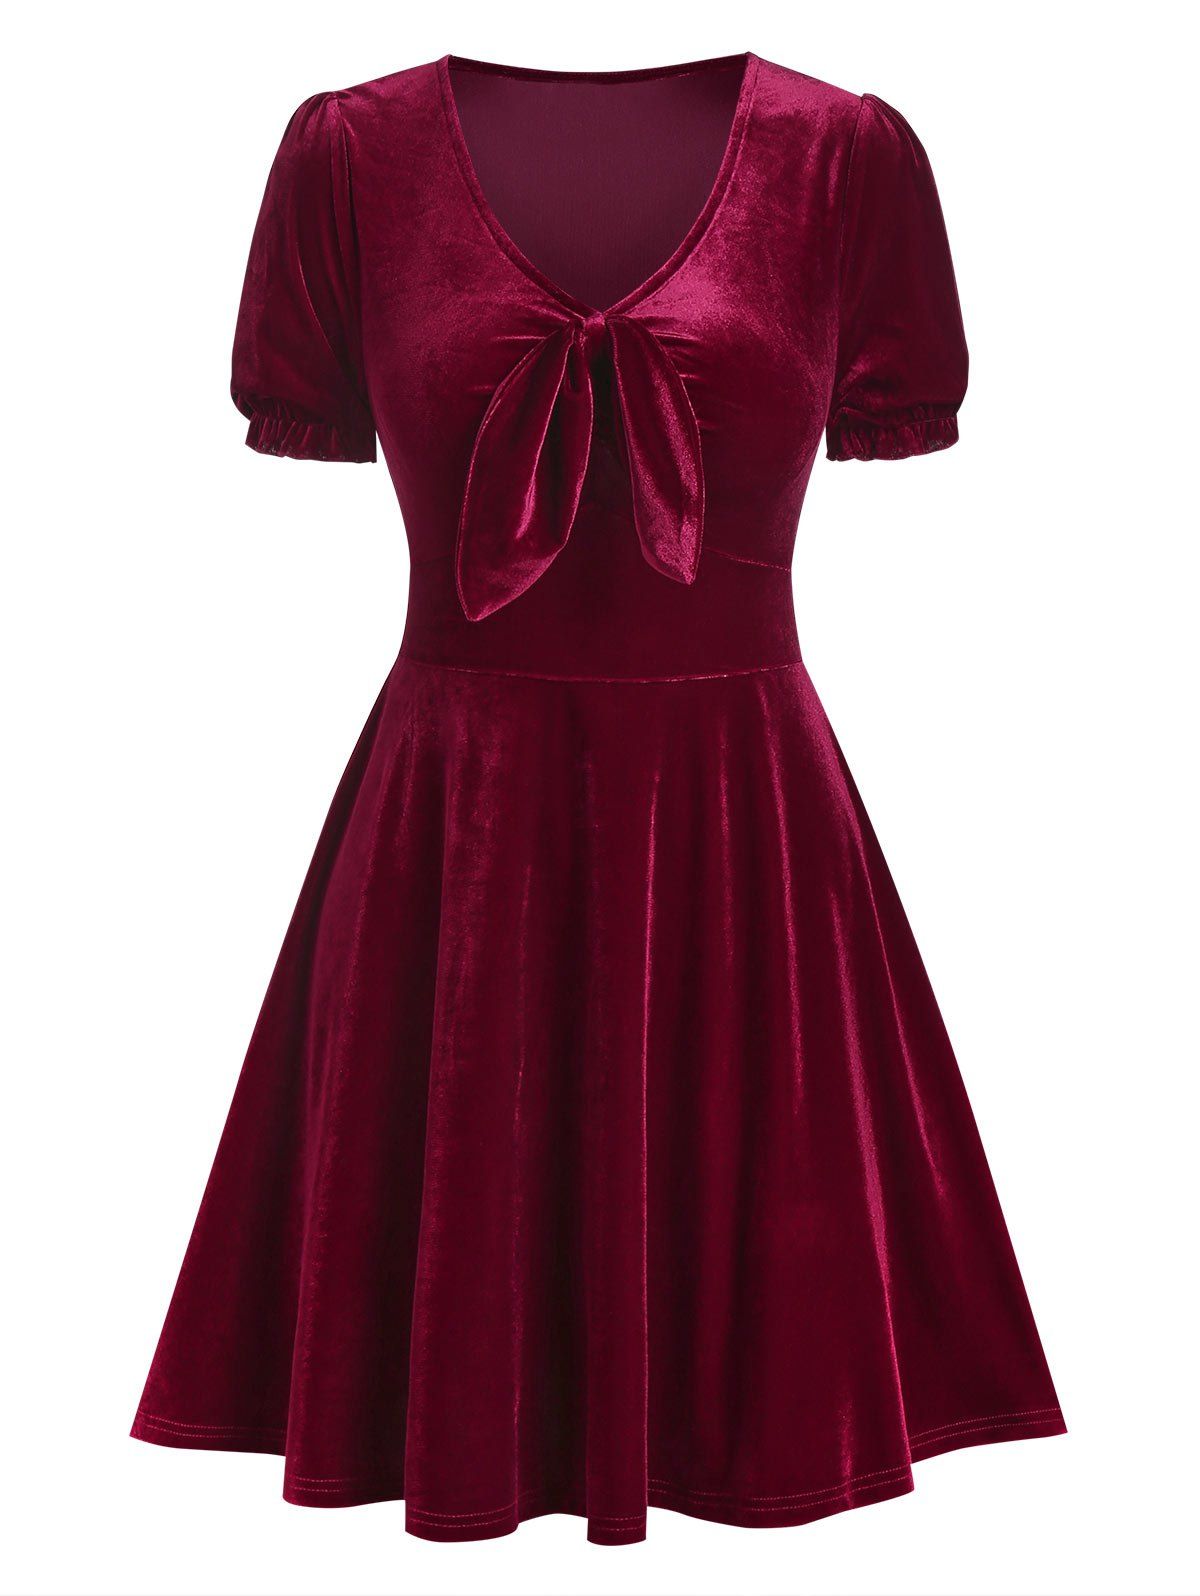 V Neck Bowknot Velour Dress - DEEP RED L